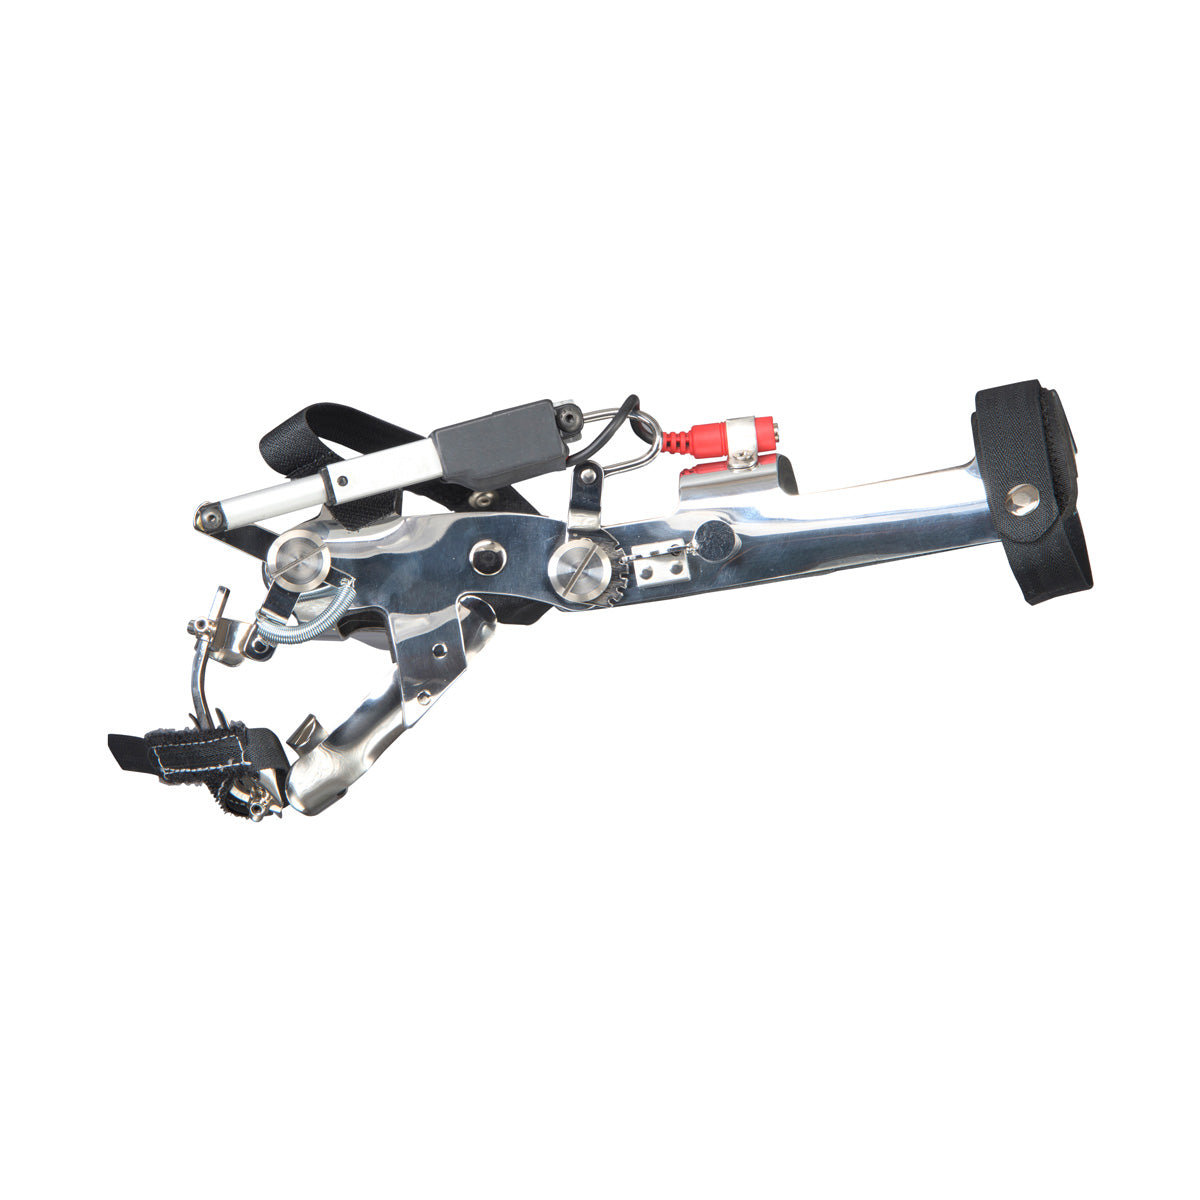 PowerGrip Orthosis - Powered Grasp Exoskeleton Glove